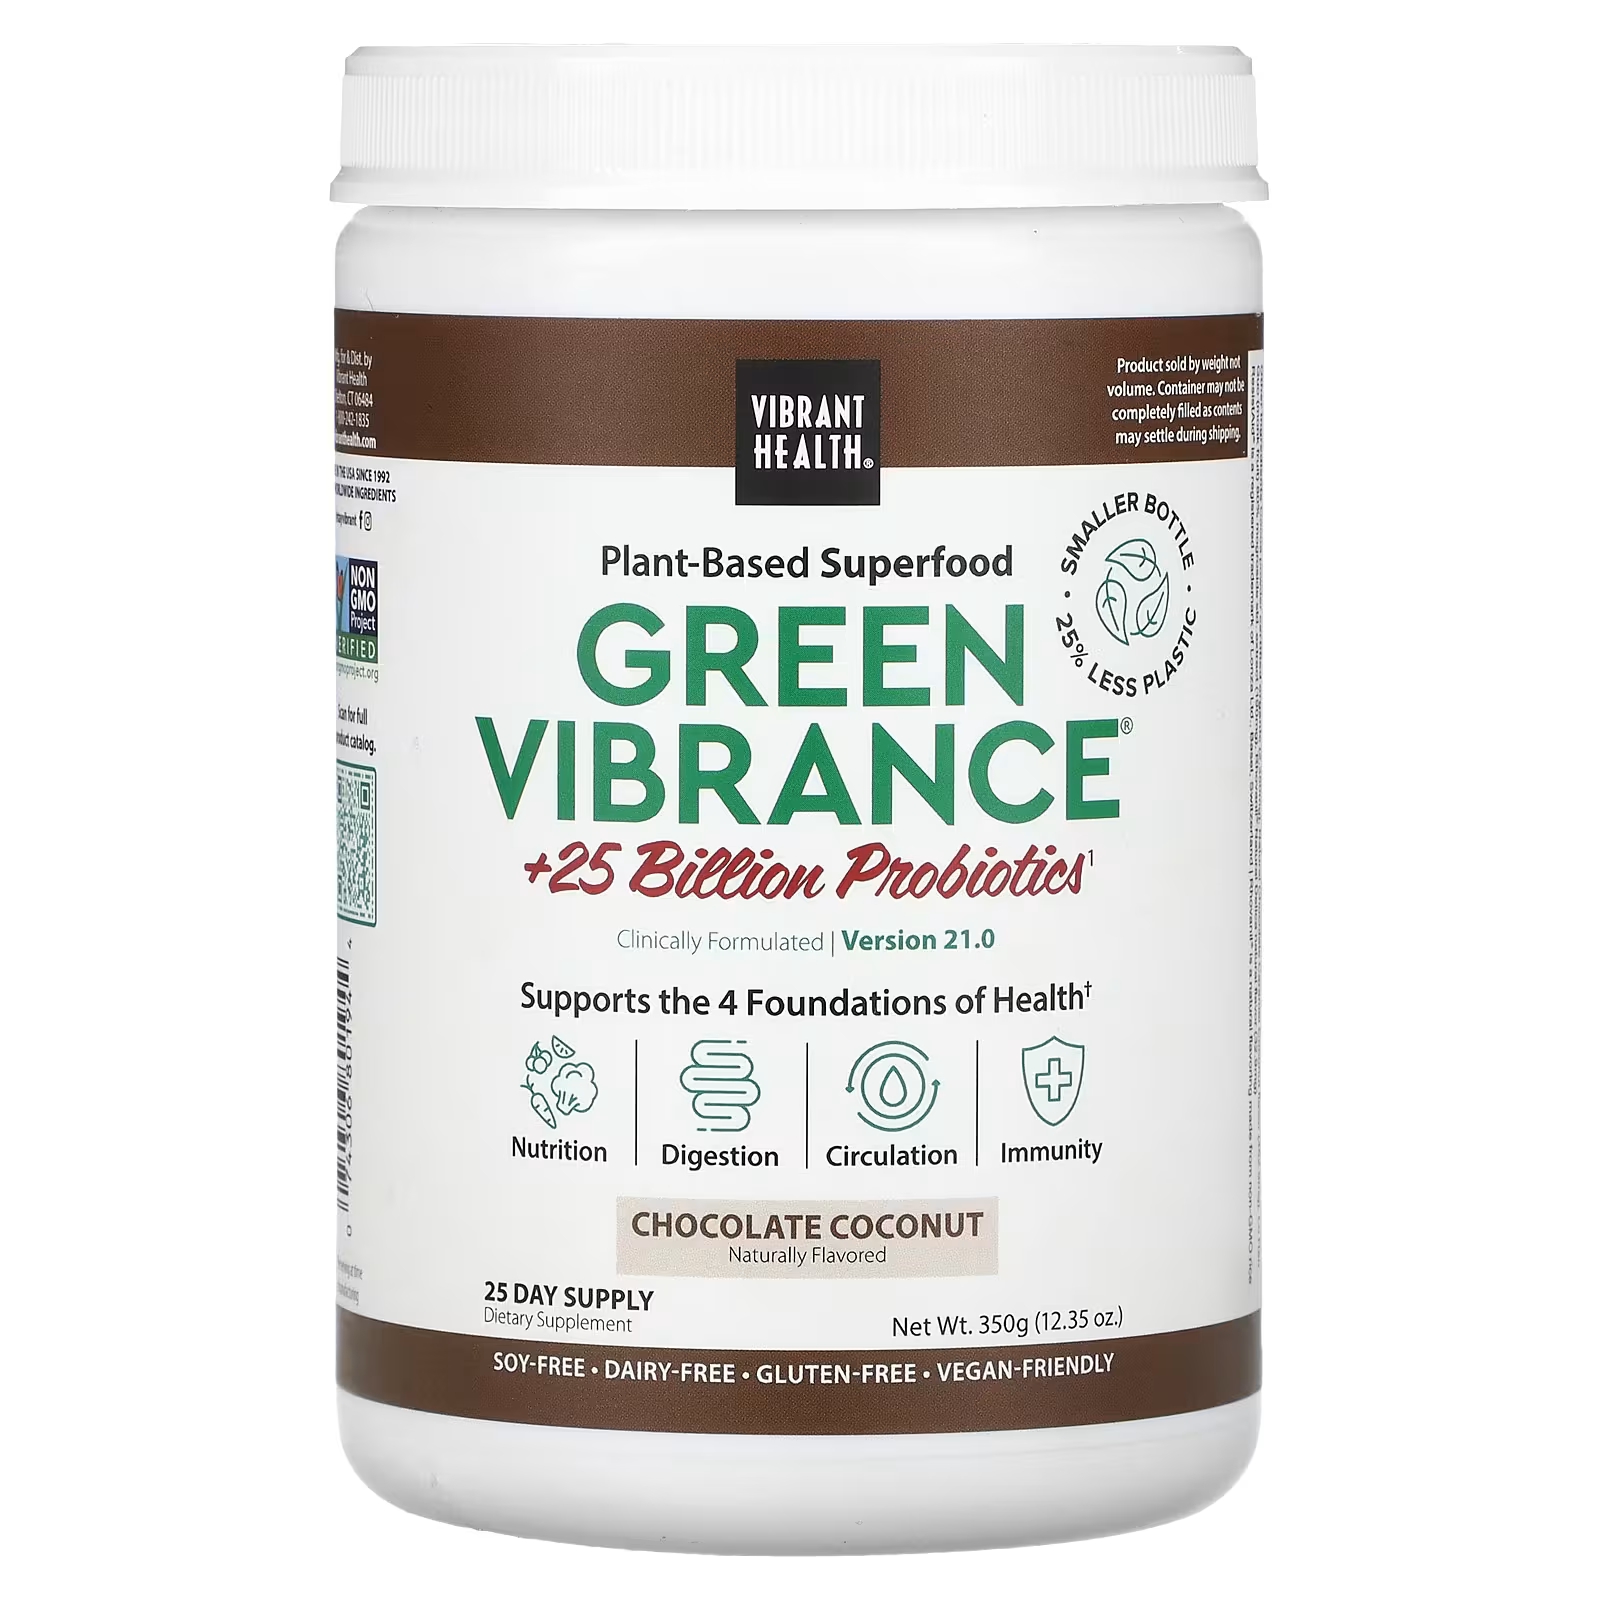 Vibrant Health Green Vibrance +25 миллиардов пробиотиков Версия 21.0 Шоколад Кокос 12,35 унции (350 г)